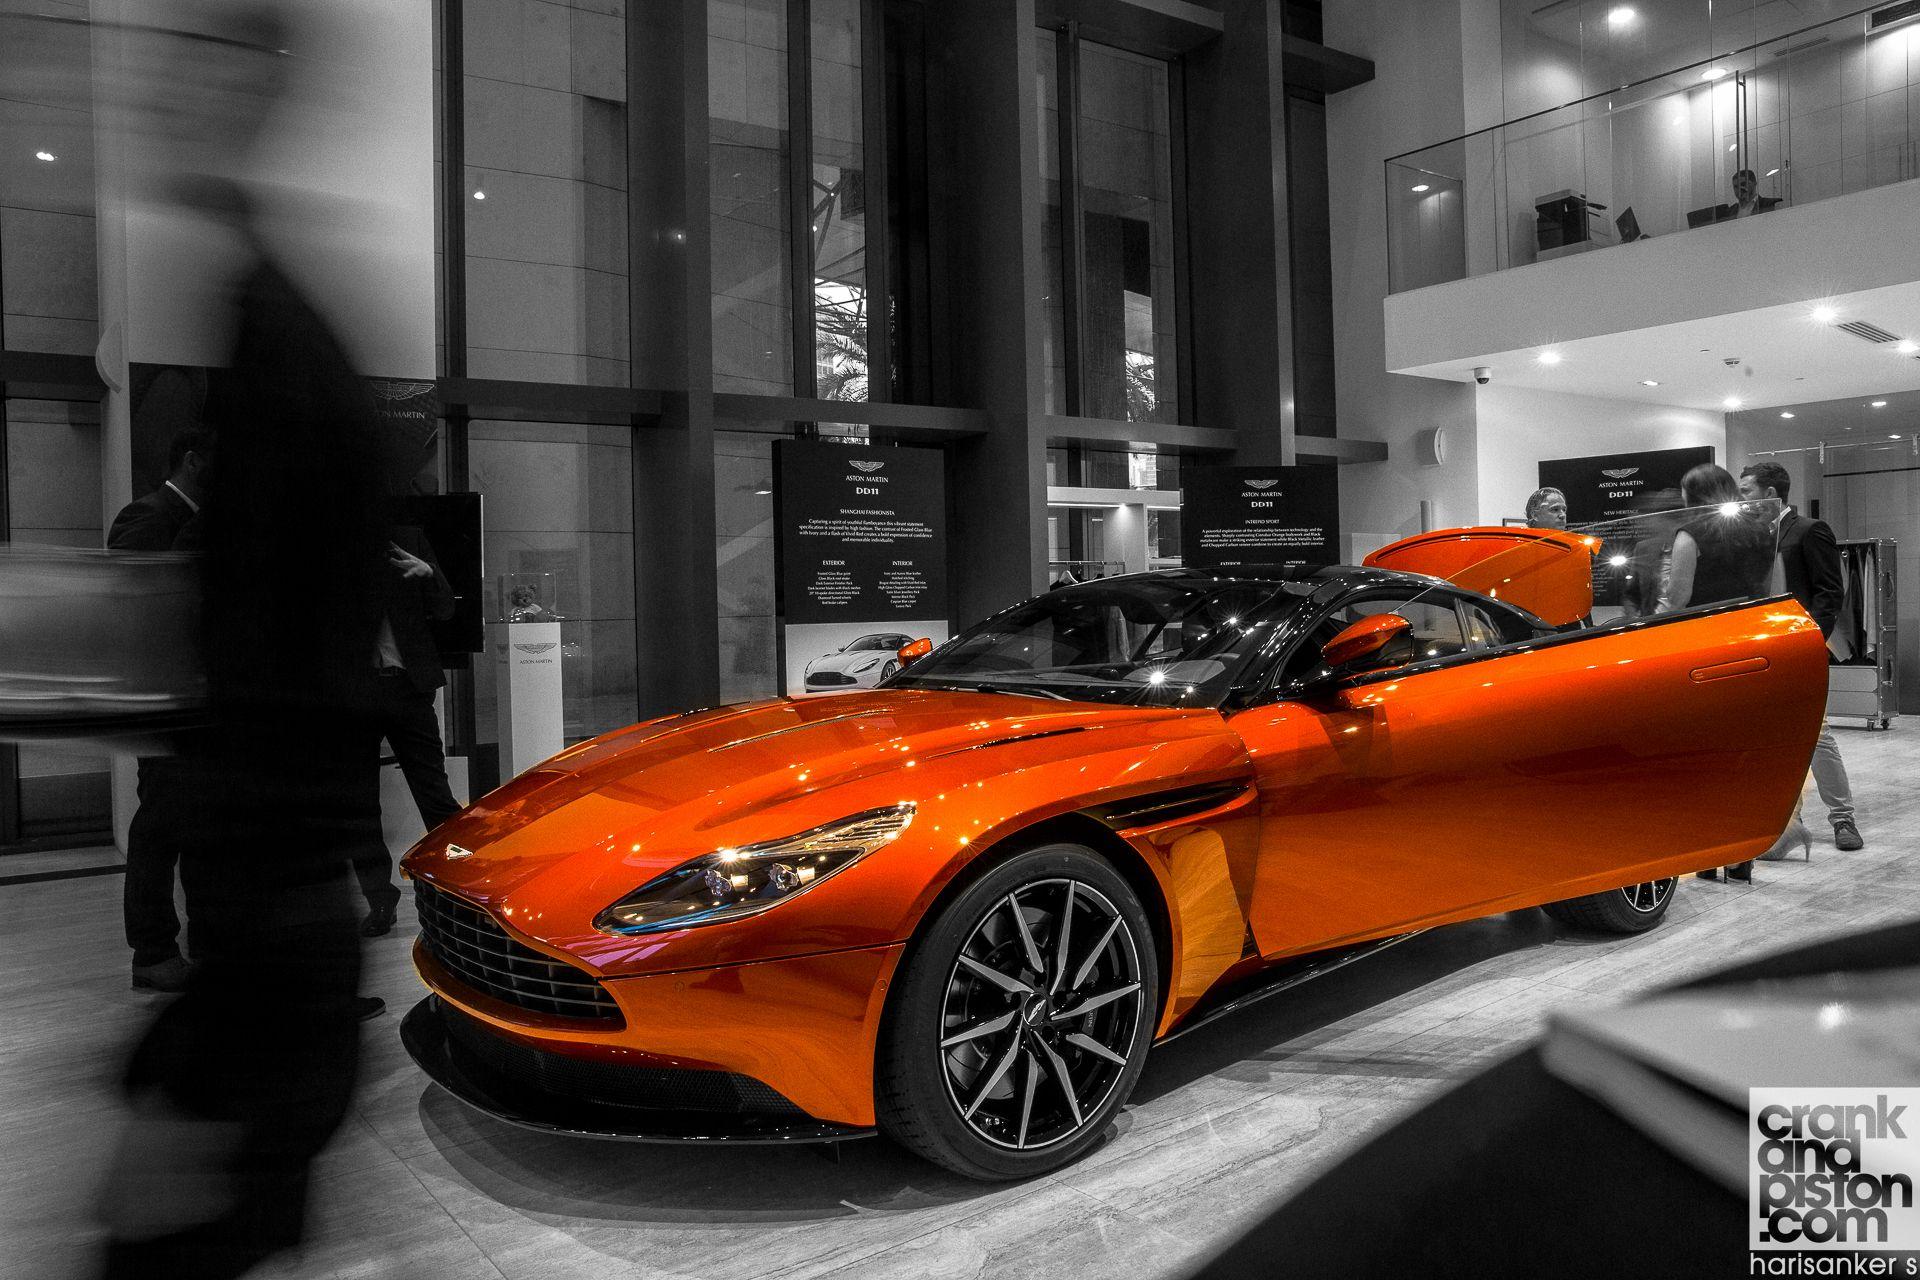 Aston Martin DB unveiled Dubai, UAE